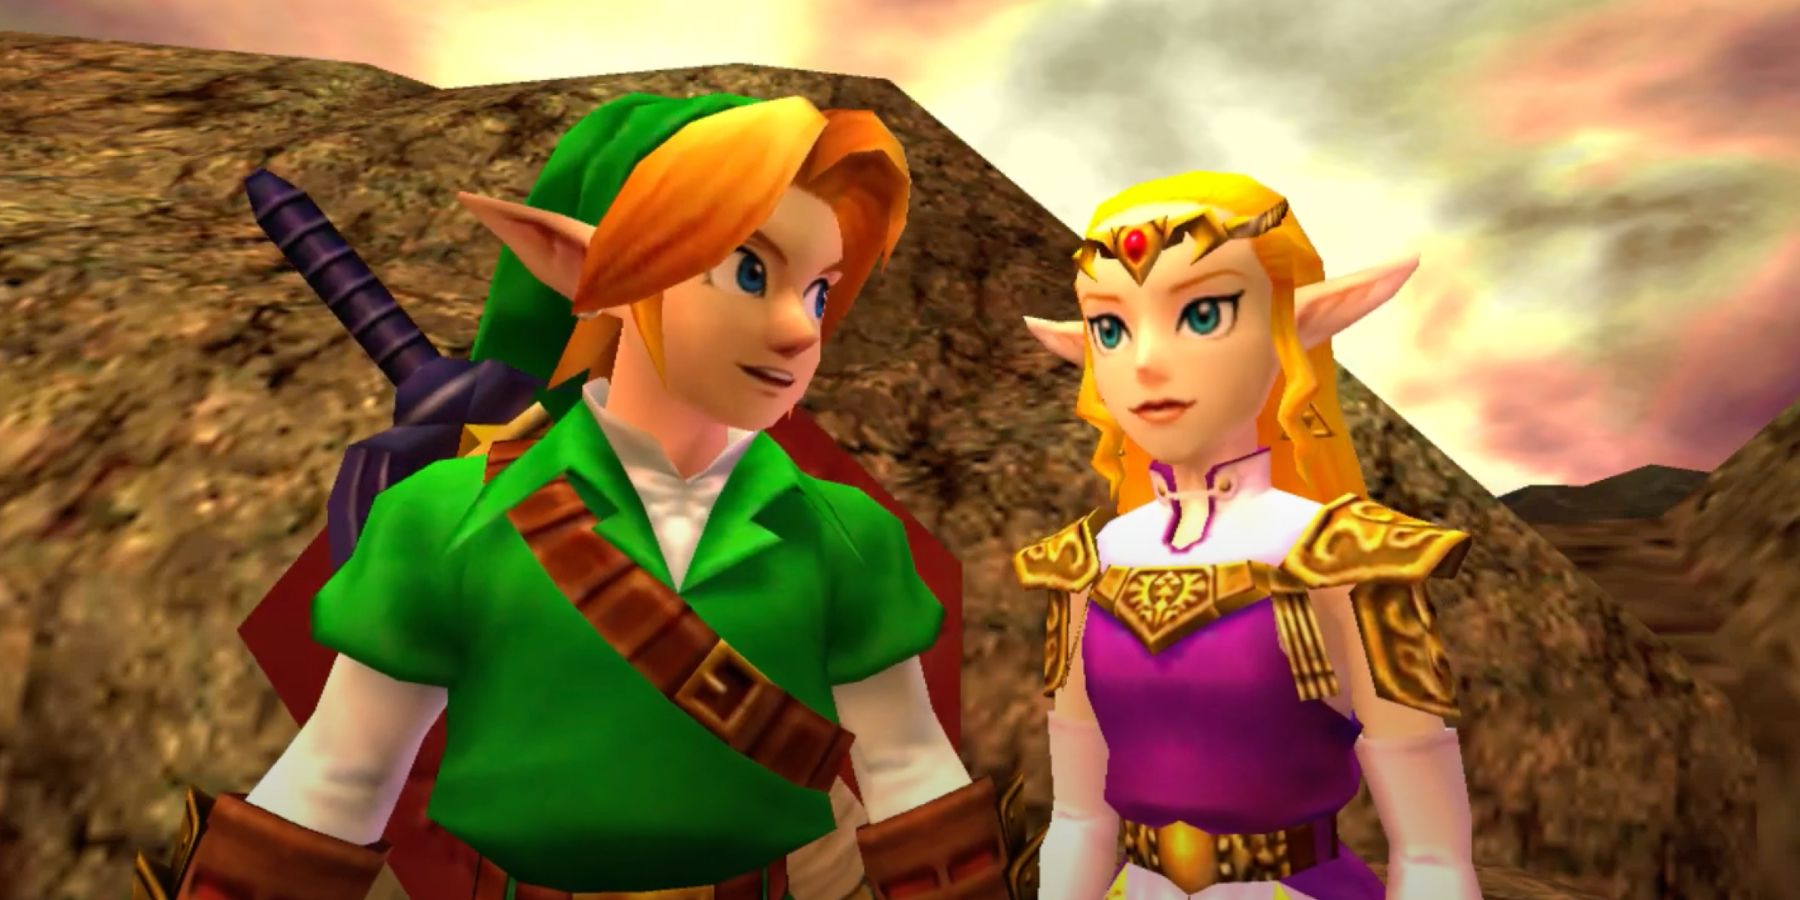 Why Ocarina Of Time's Link &amp; Zelda Probably Aren't Really Siblings Link Smiling At Zelda